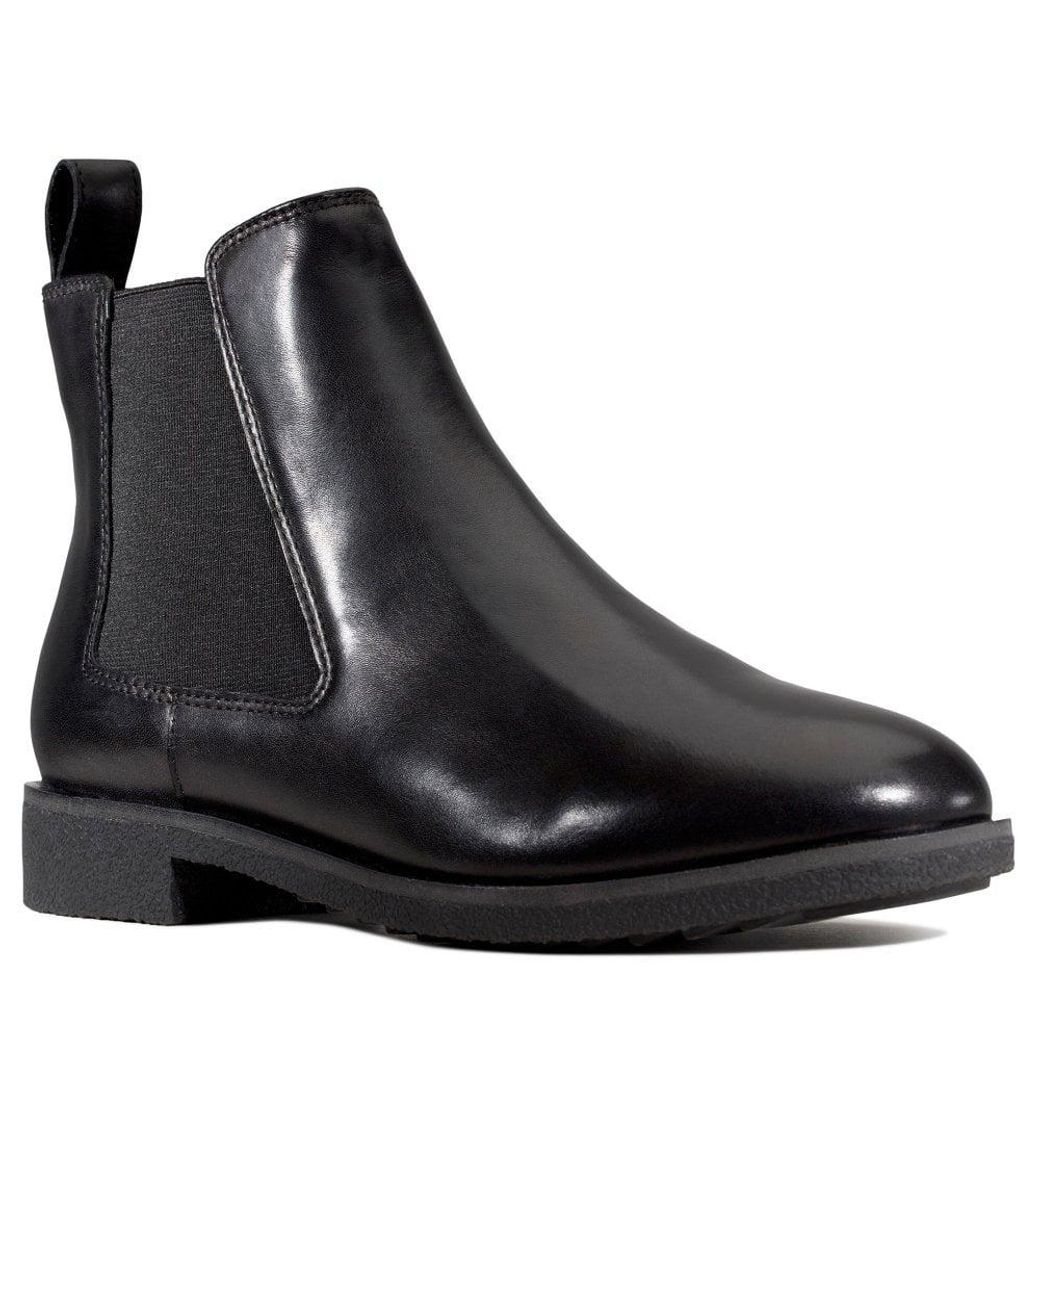 Clarks Griffin Plaza Chelsea Boots in Black | Lyst Australia